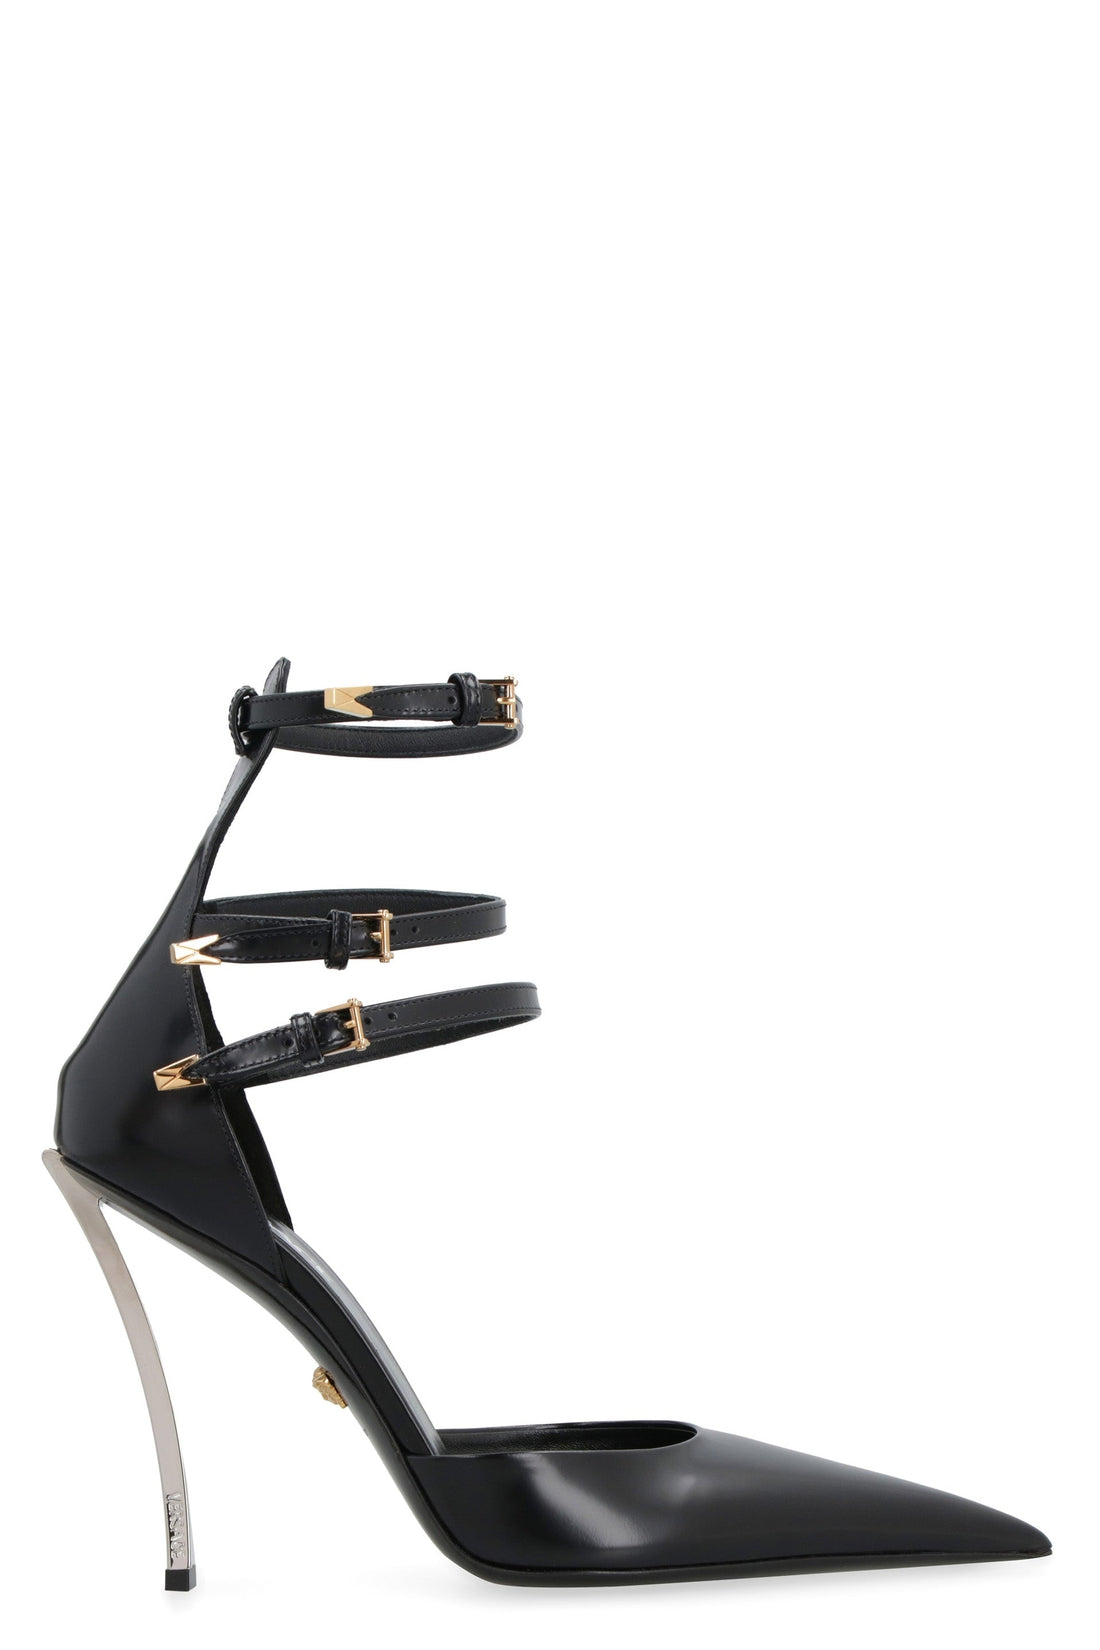 Versace-OUTLET-SALE-Leather pointy-toe pumps-ARCHIVIST